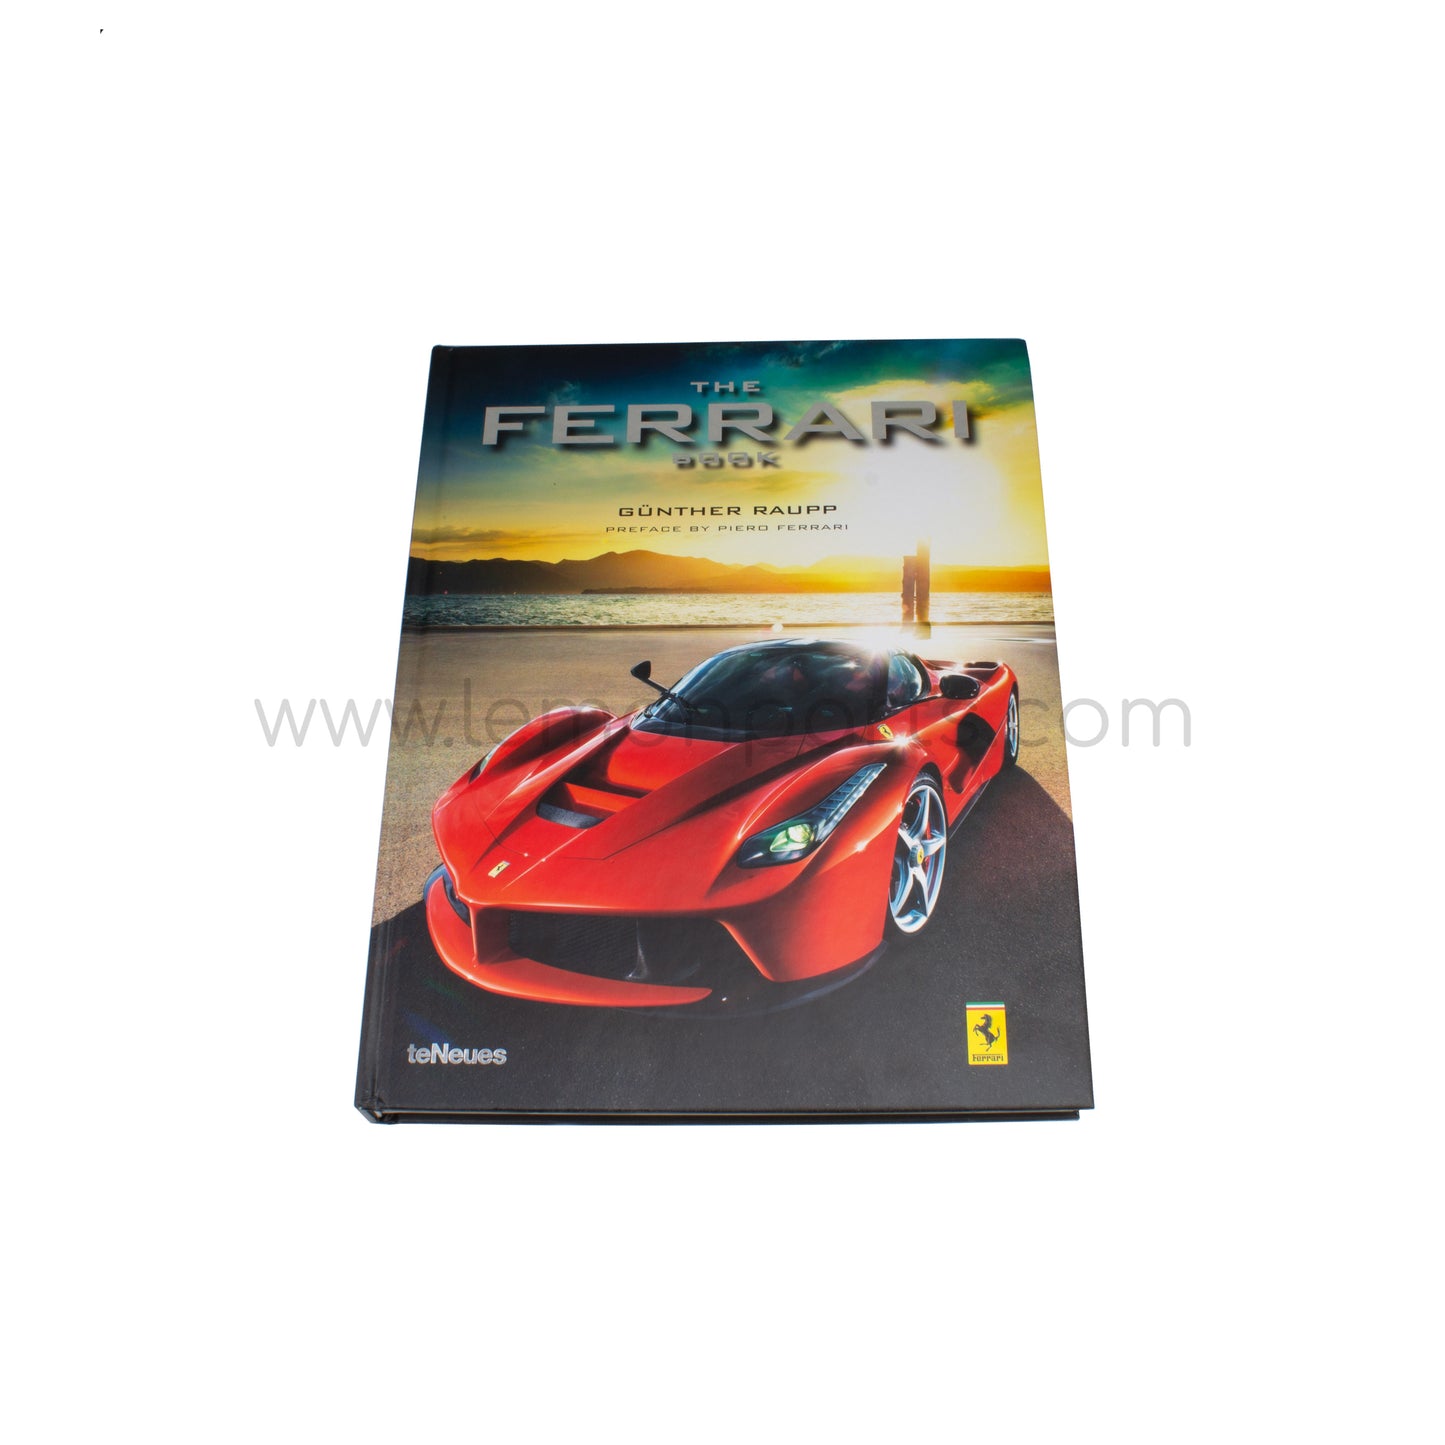 The Ferrari book by Gunther Raupp & preface by Piero Ferrari